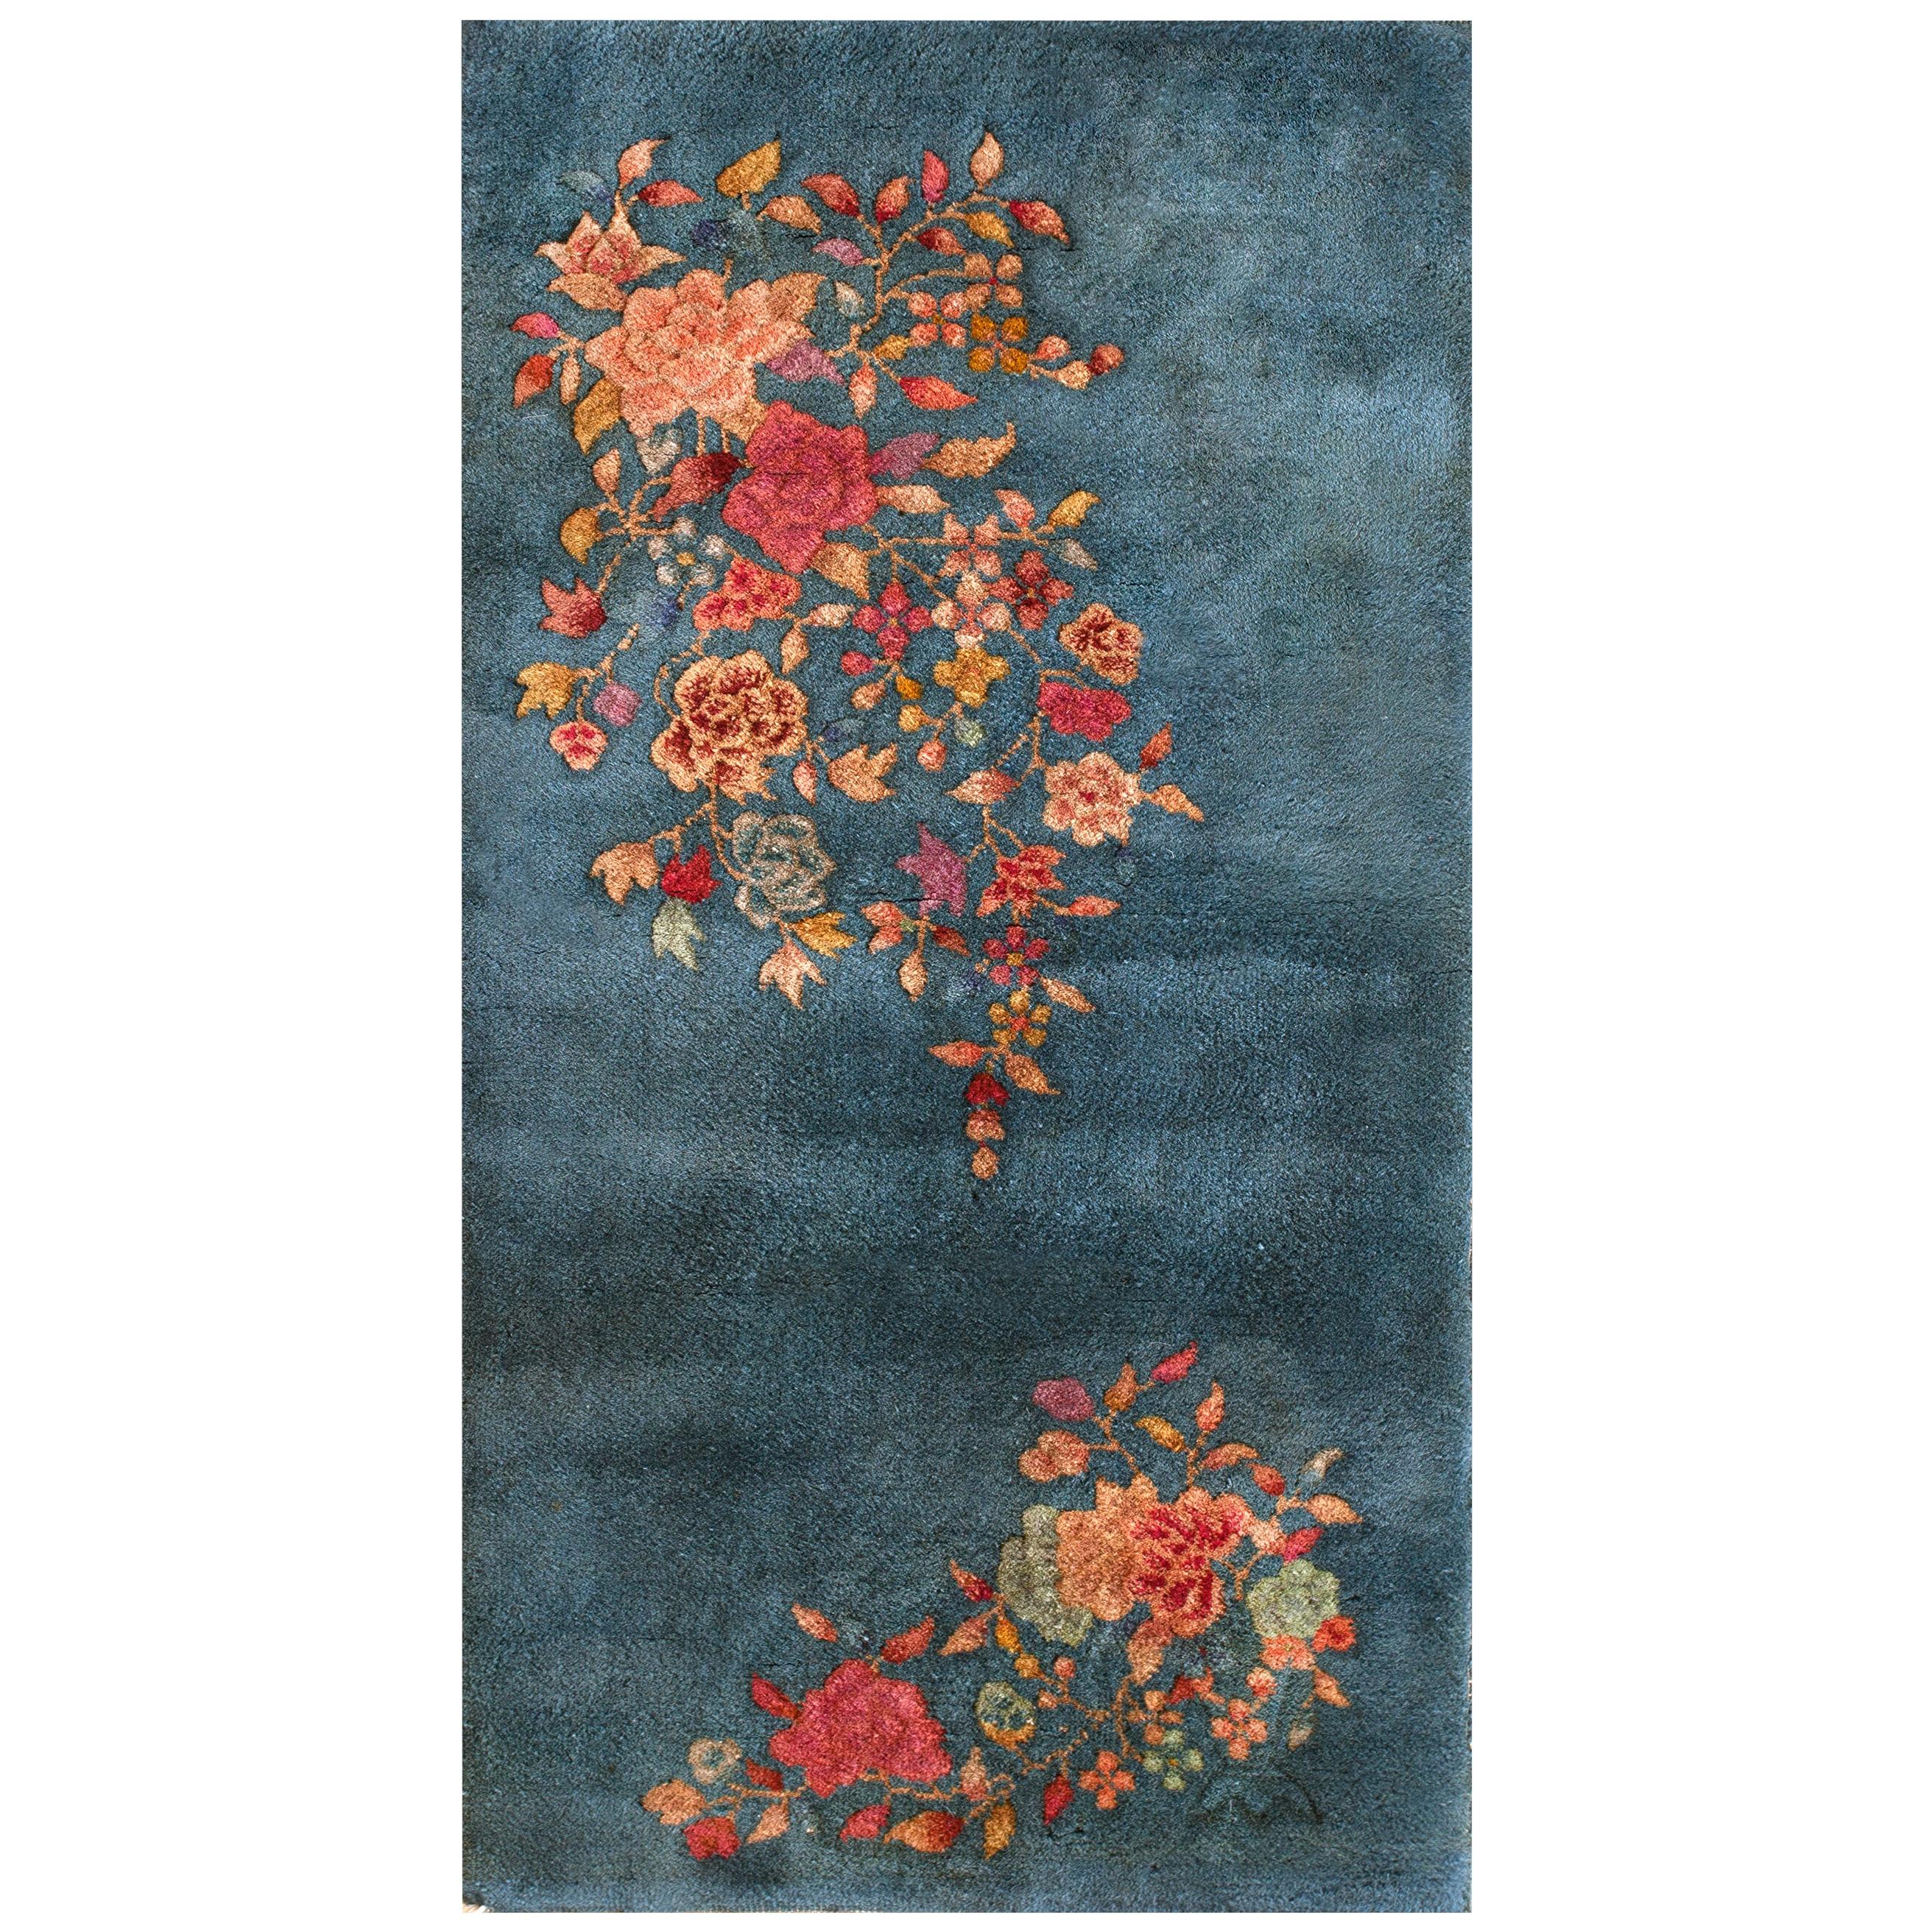 1920s Chinese Art Deco Carpet ( 2' 2" x 3' 10" - 66 x 116 cm ) For Sale